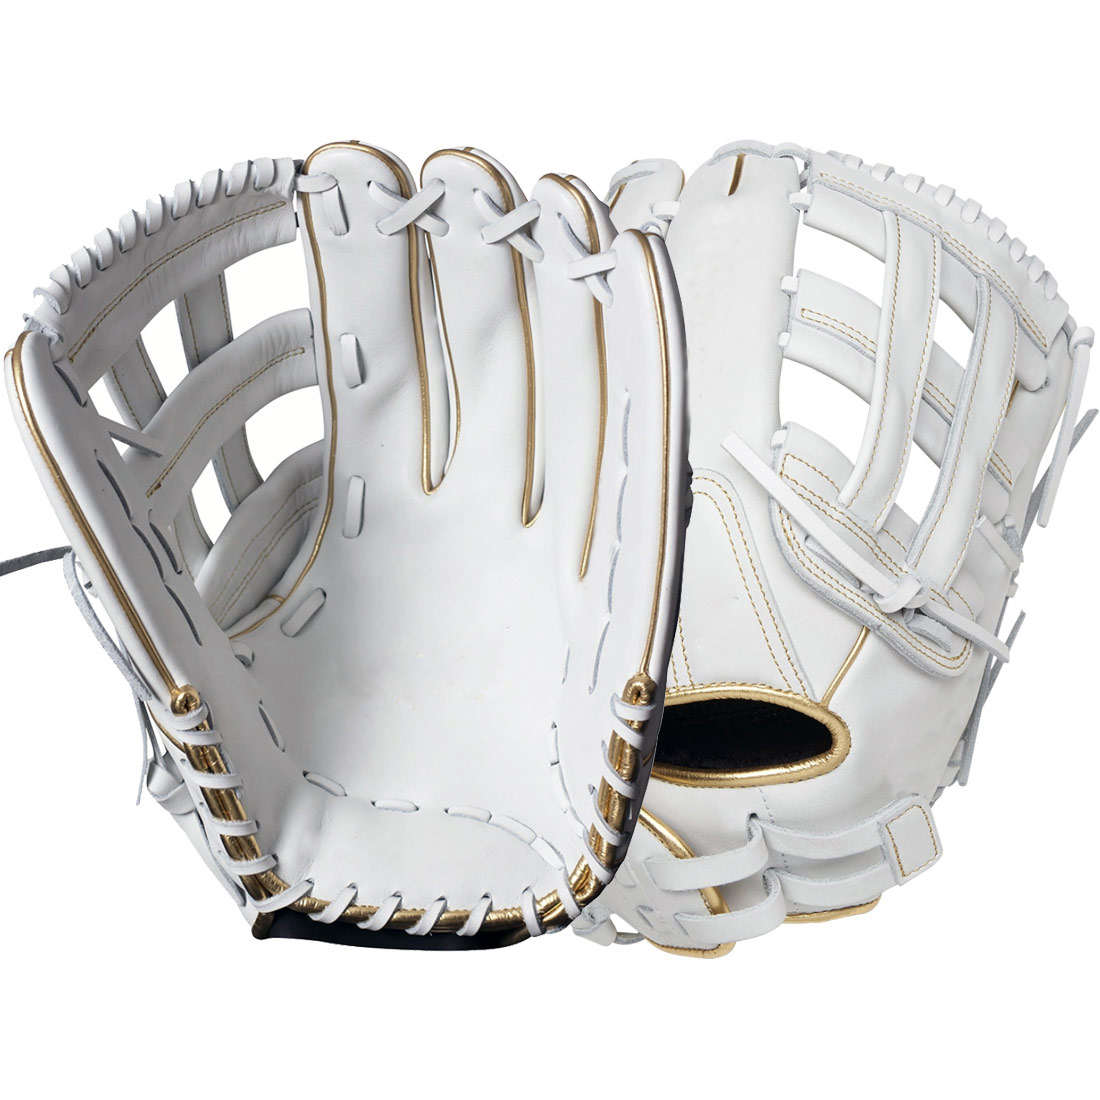 13' white glod full kip leather H web infield right hand thrower baseball glove